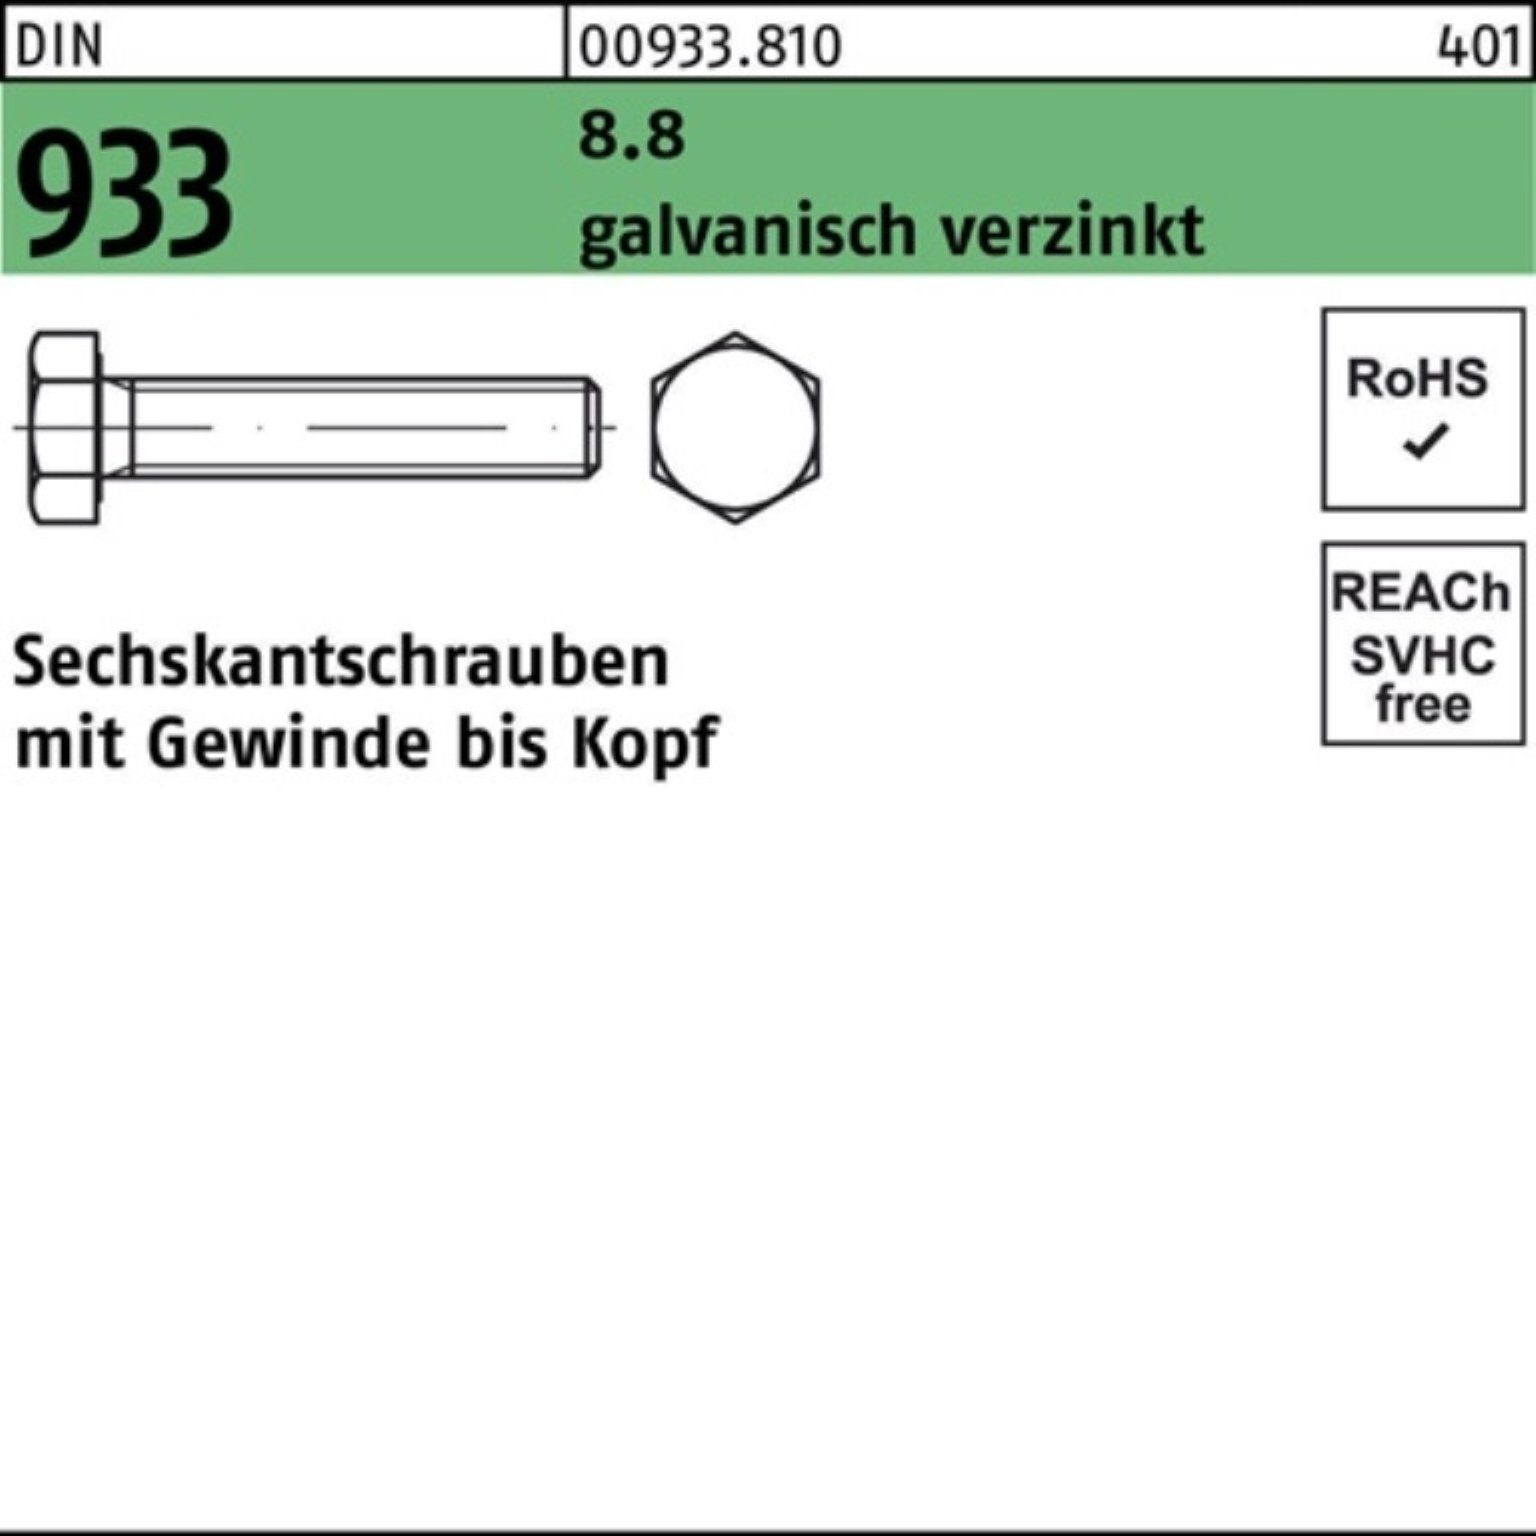 Reyher Sechskantschraube 100er Pack 1 Stü galv.verz. 933 DIN Sechskantschraube VG 120 M42x 8.8